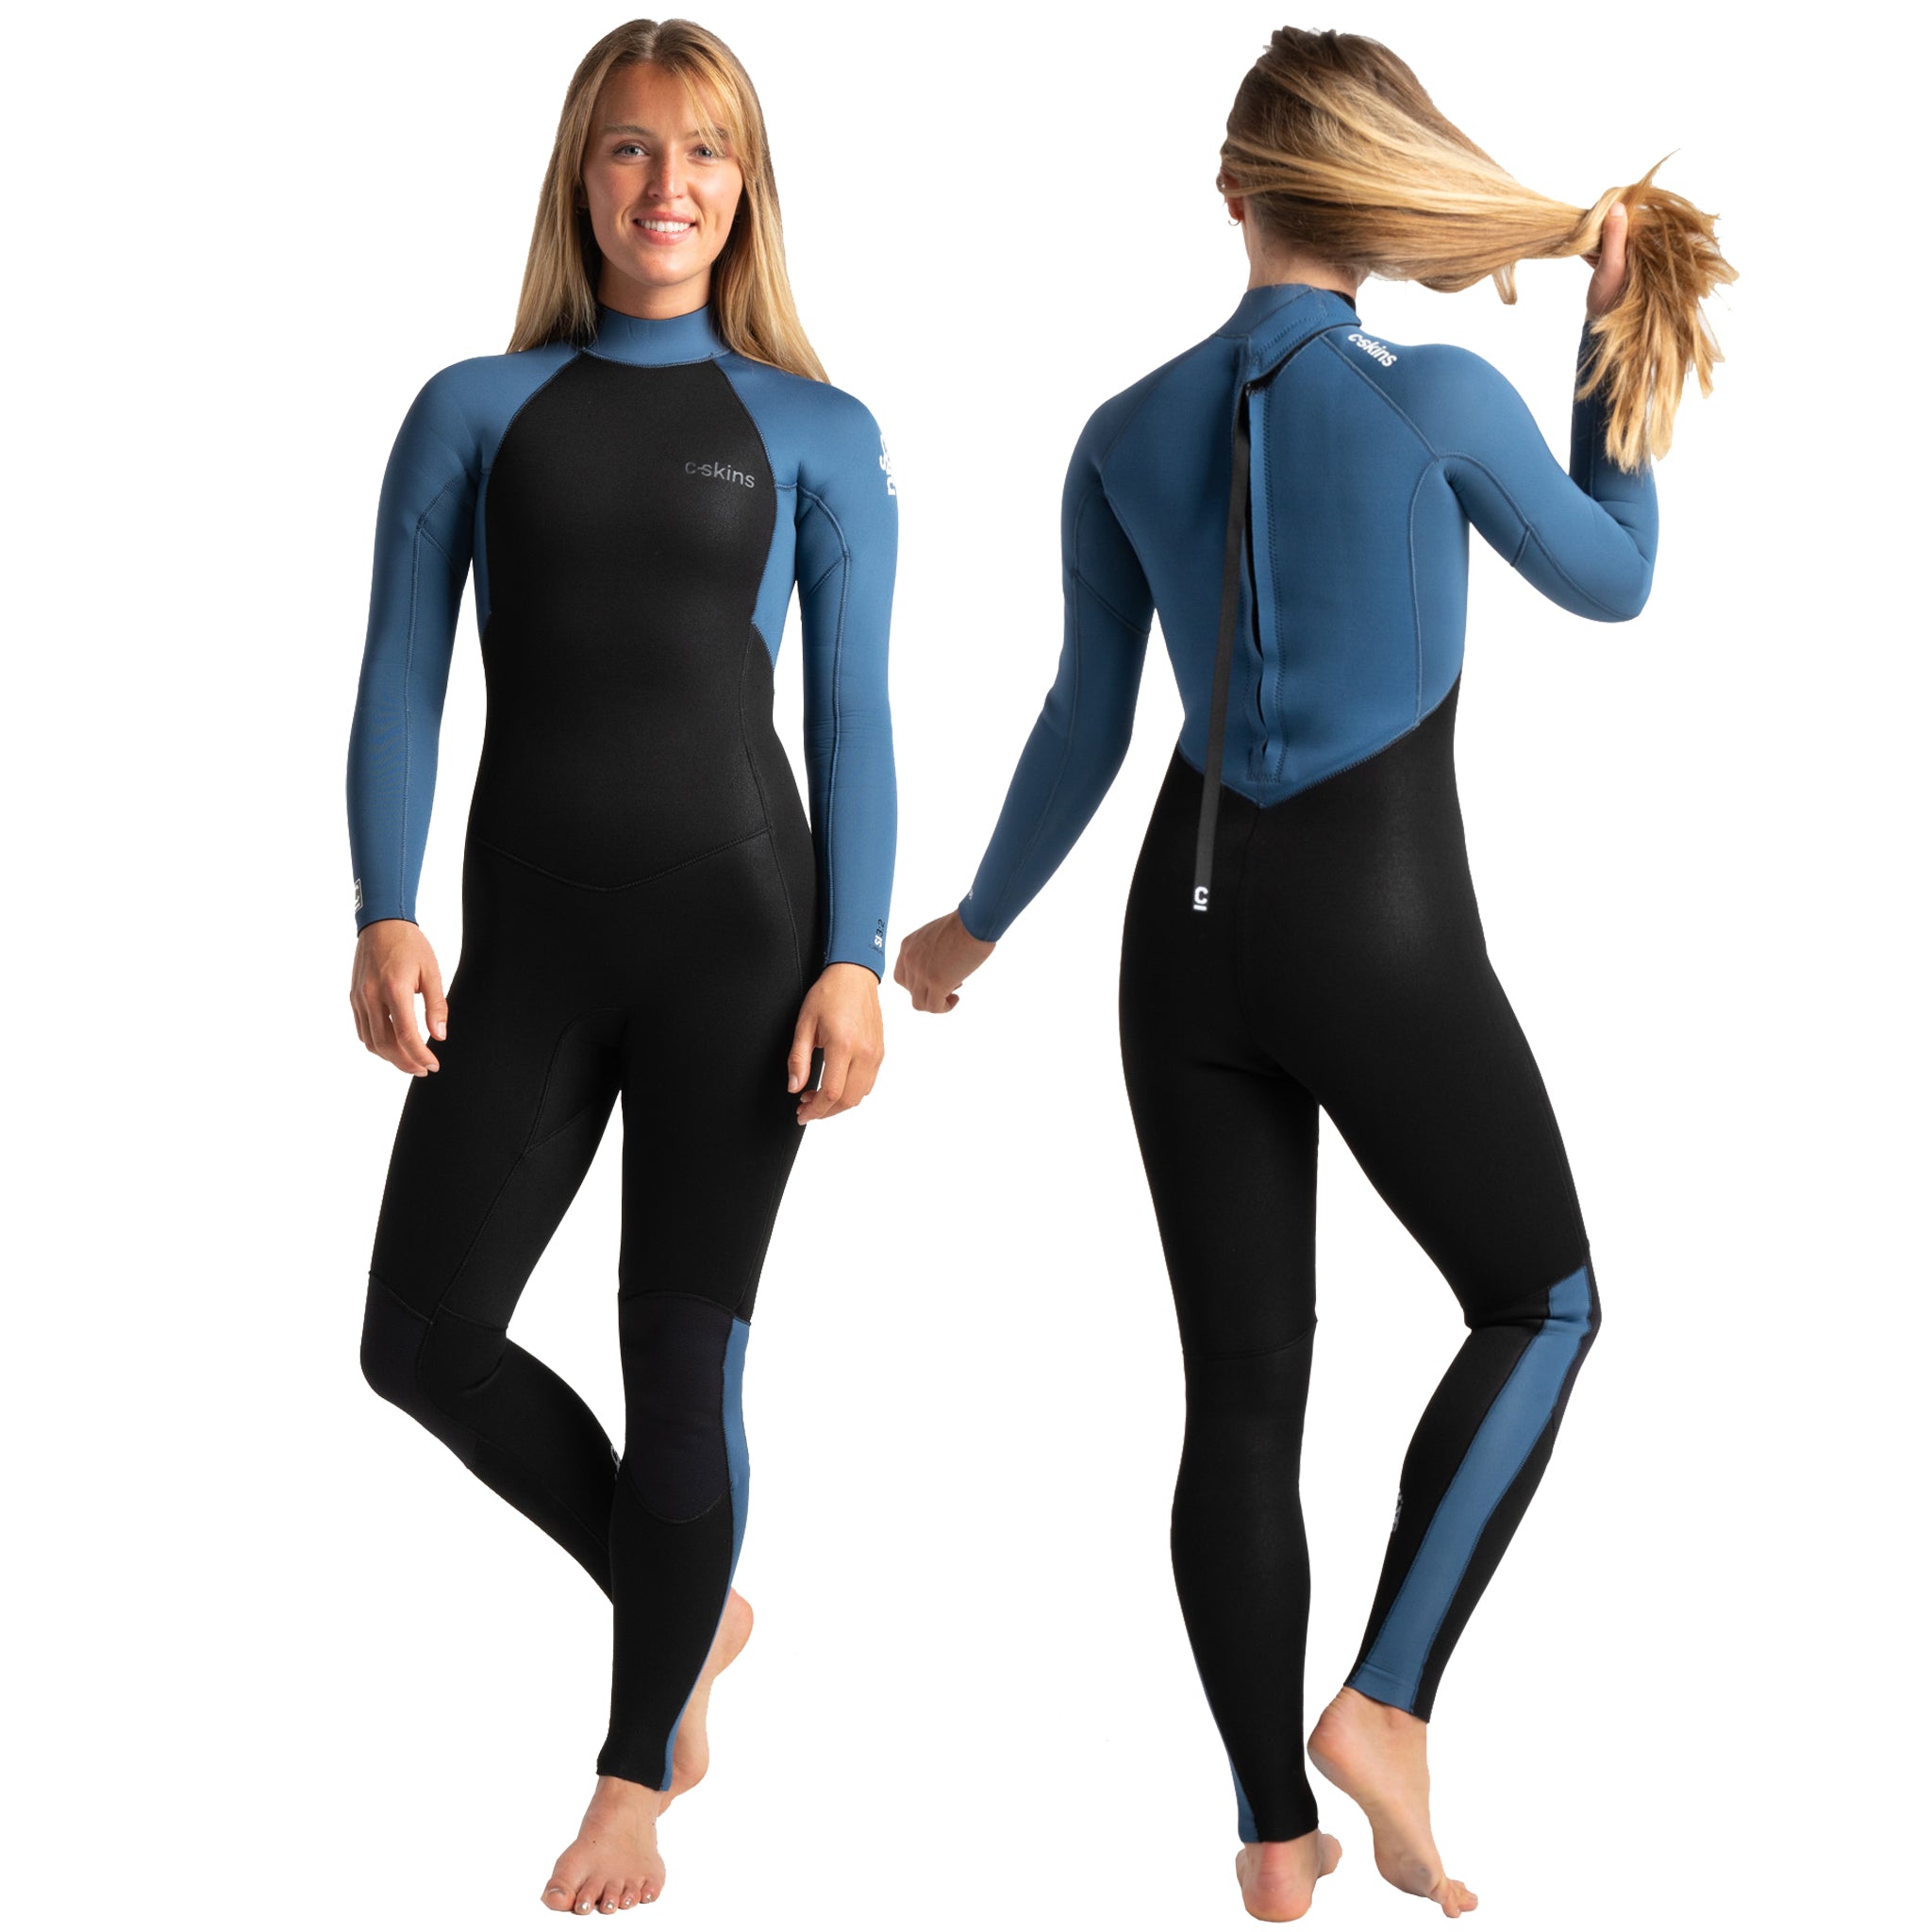 C-Skins Surflite 4:3mm Women's Wetsuit Black/Blue Tie Dye